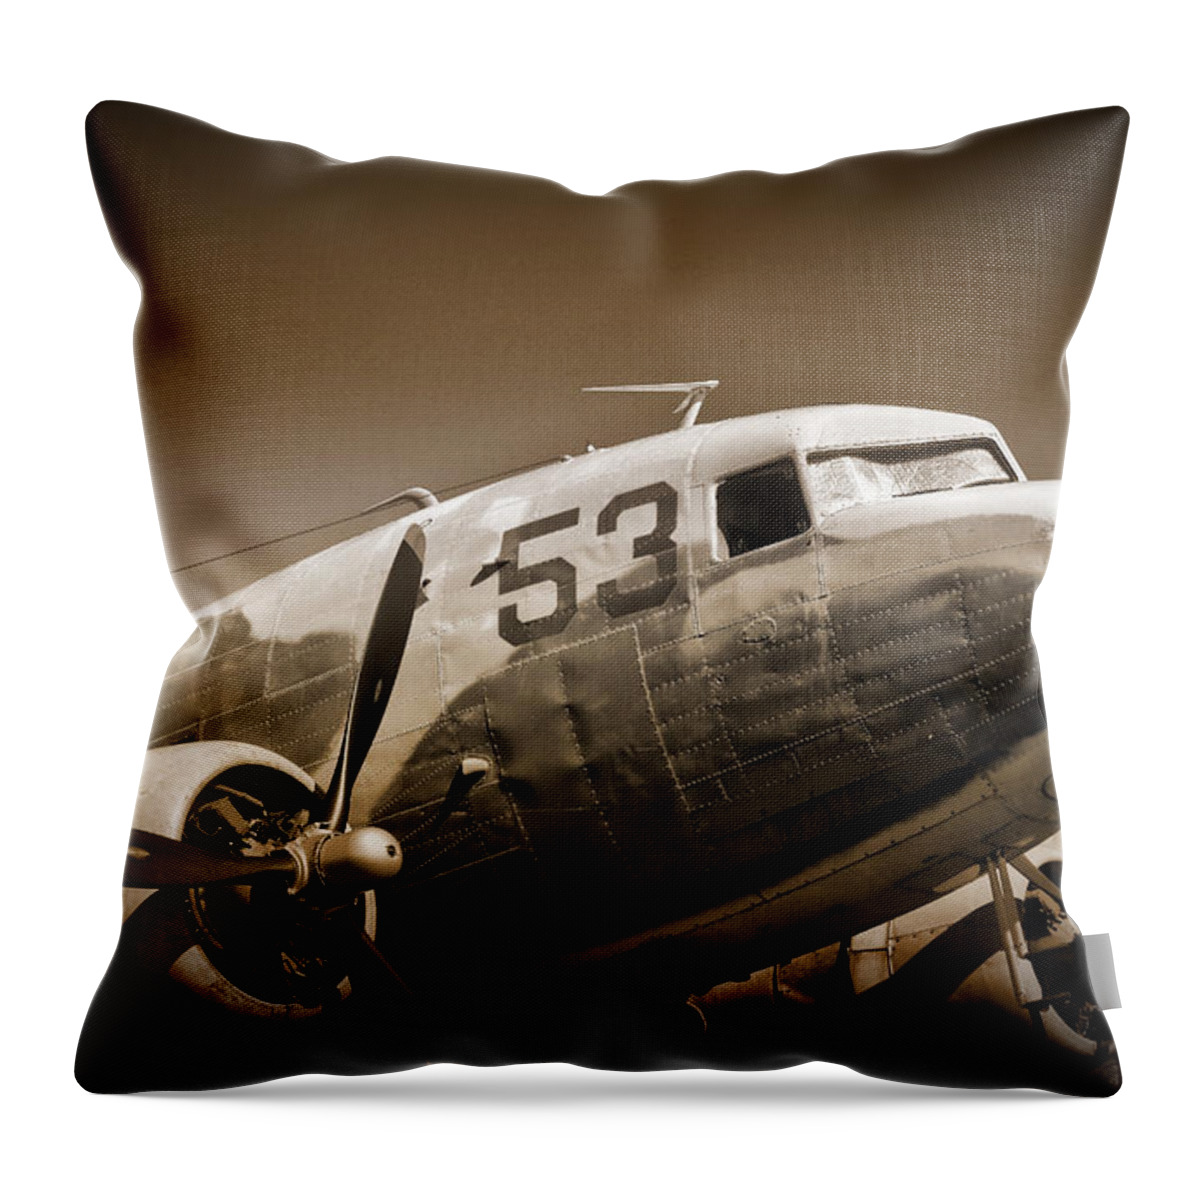 Photograph Throw Pillow featuring the photograph C-47 Sky Train by Richard Gehlbach